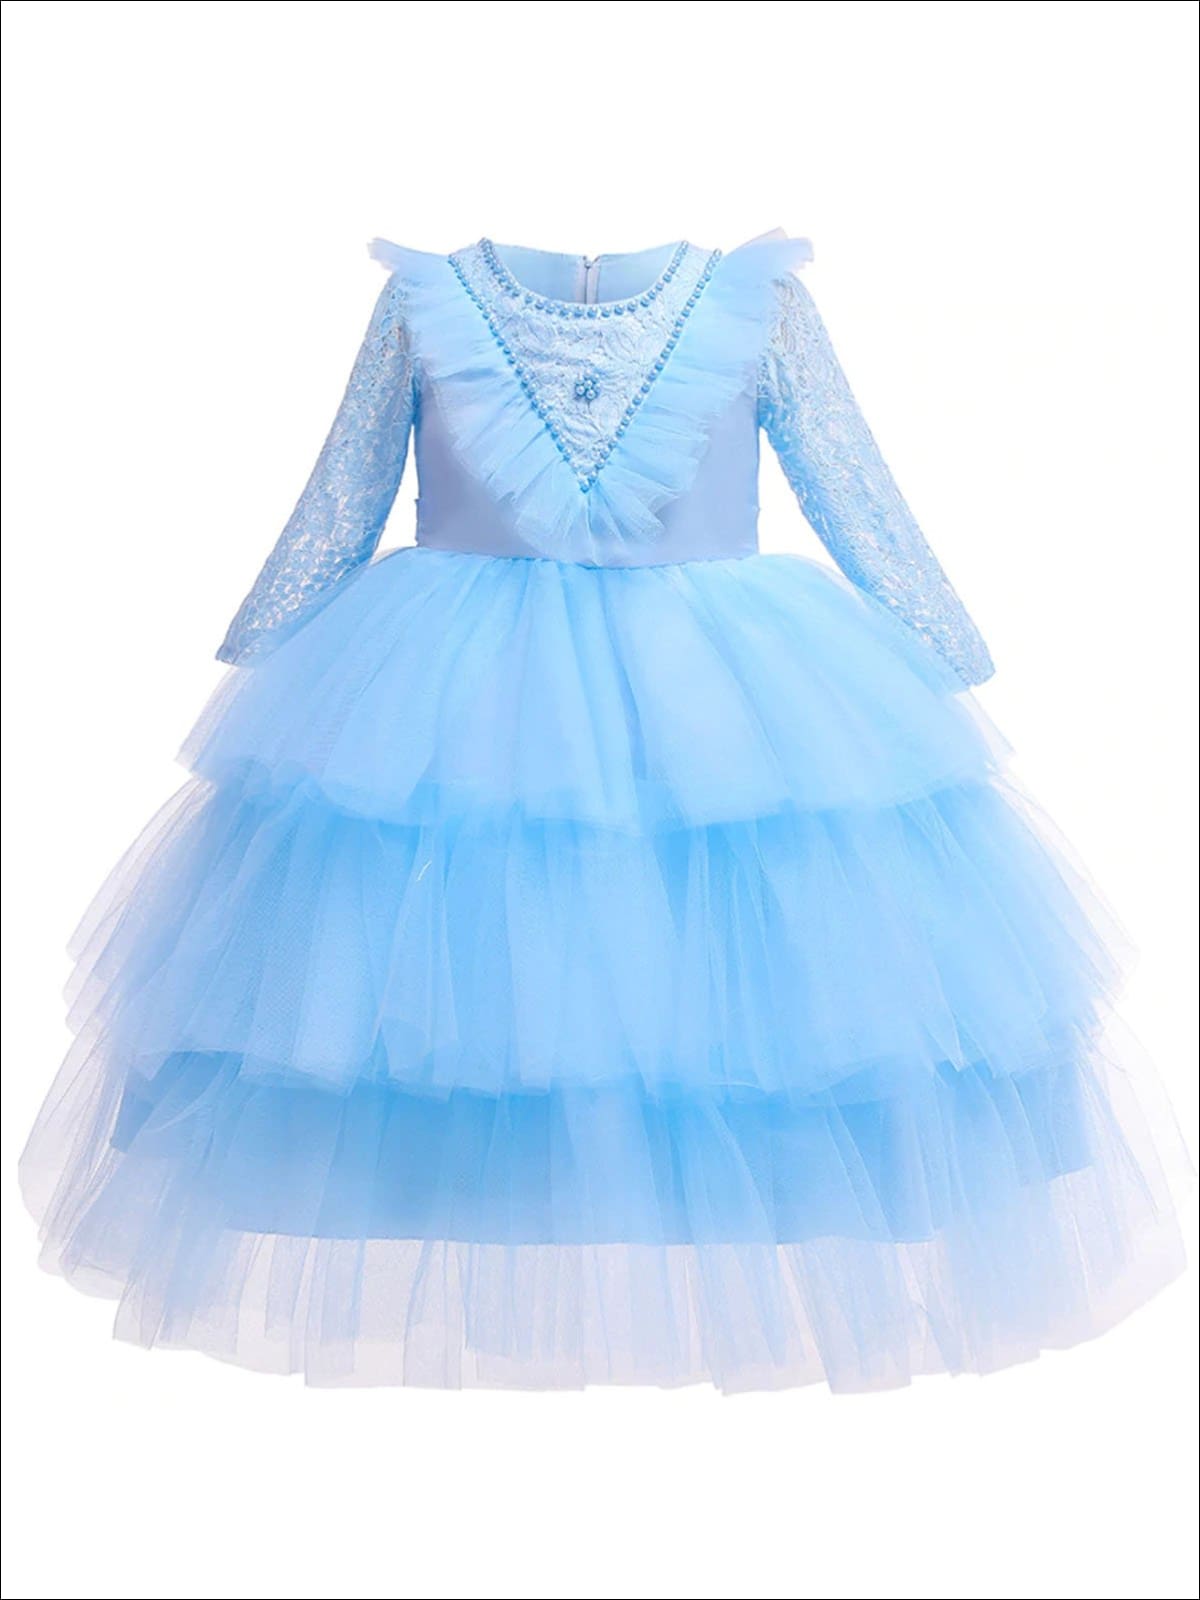 Girls Tiered Embellished Lace Dress - Blue / 2T - Girls Spring Dressy Dress